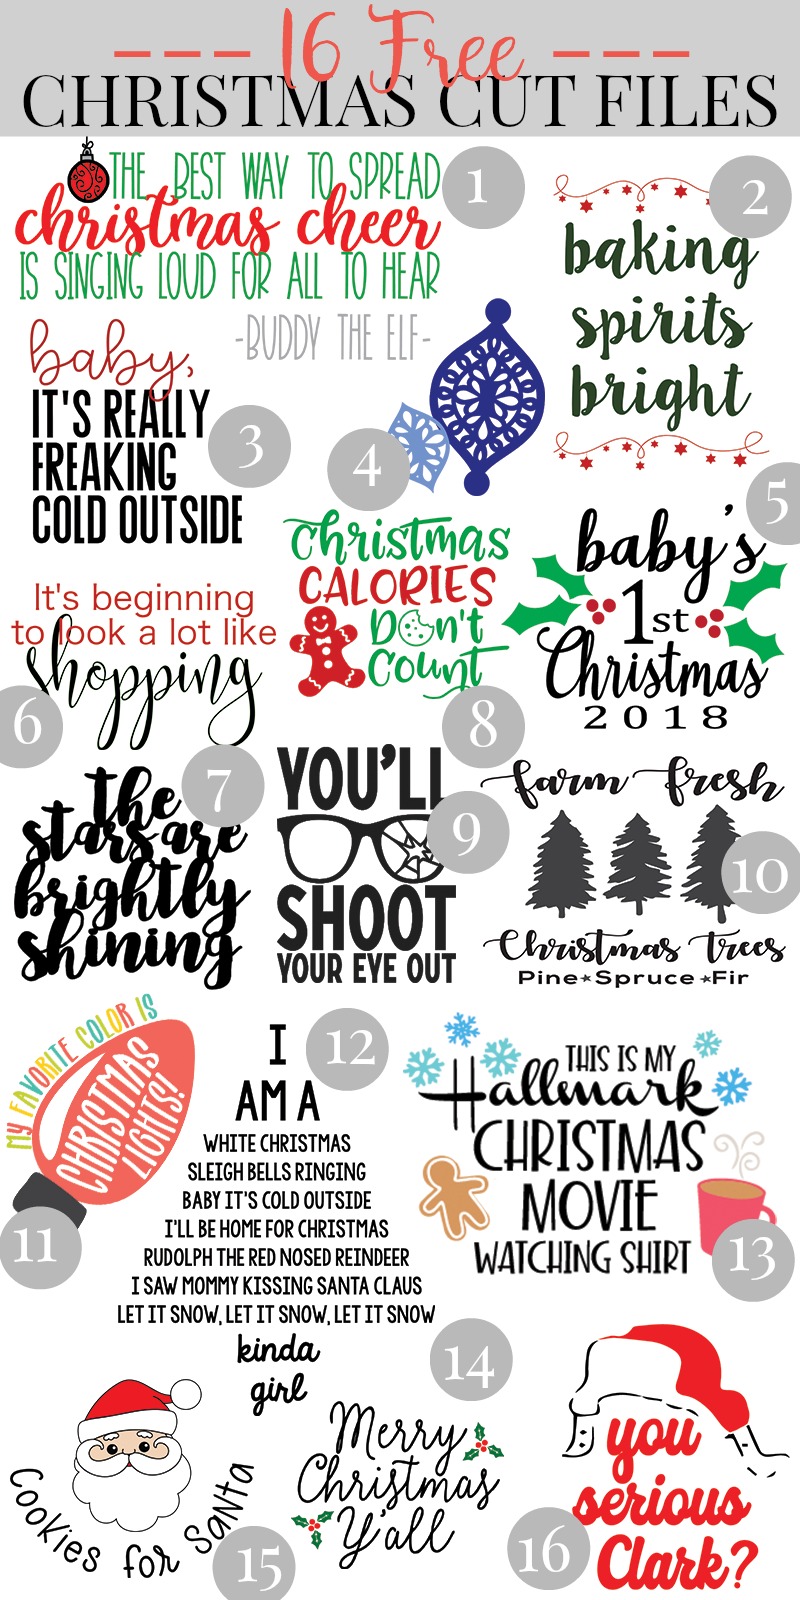 Christmas SVG Collection